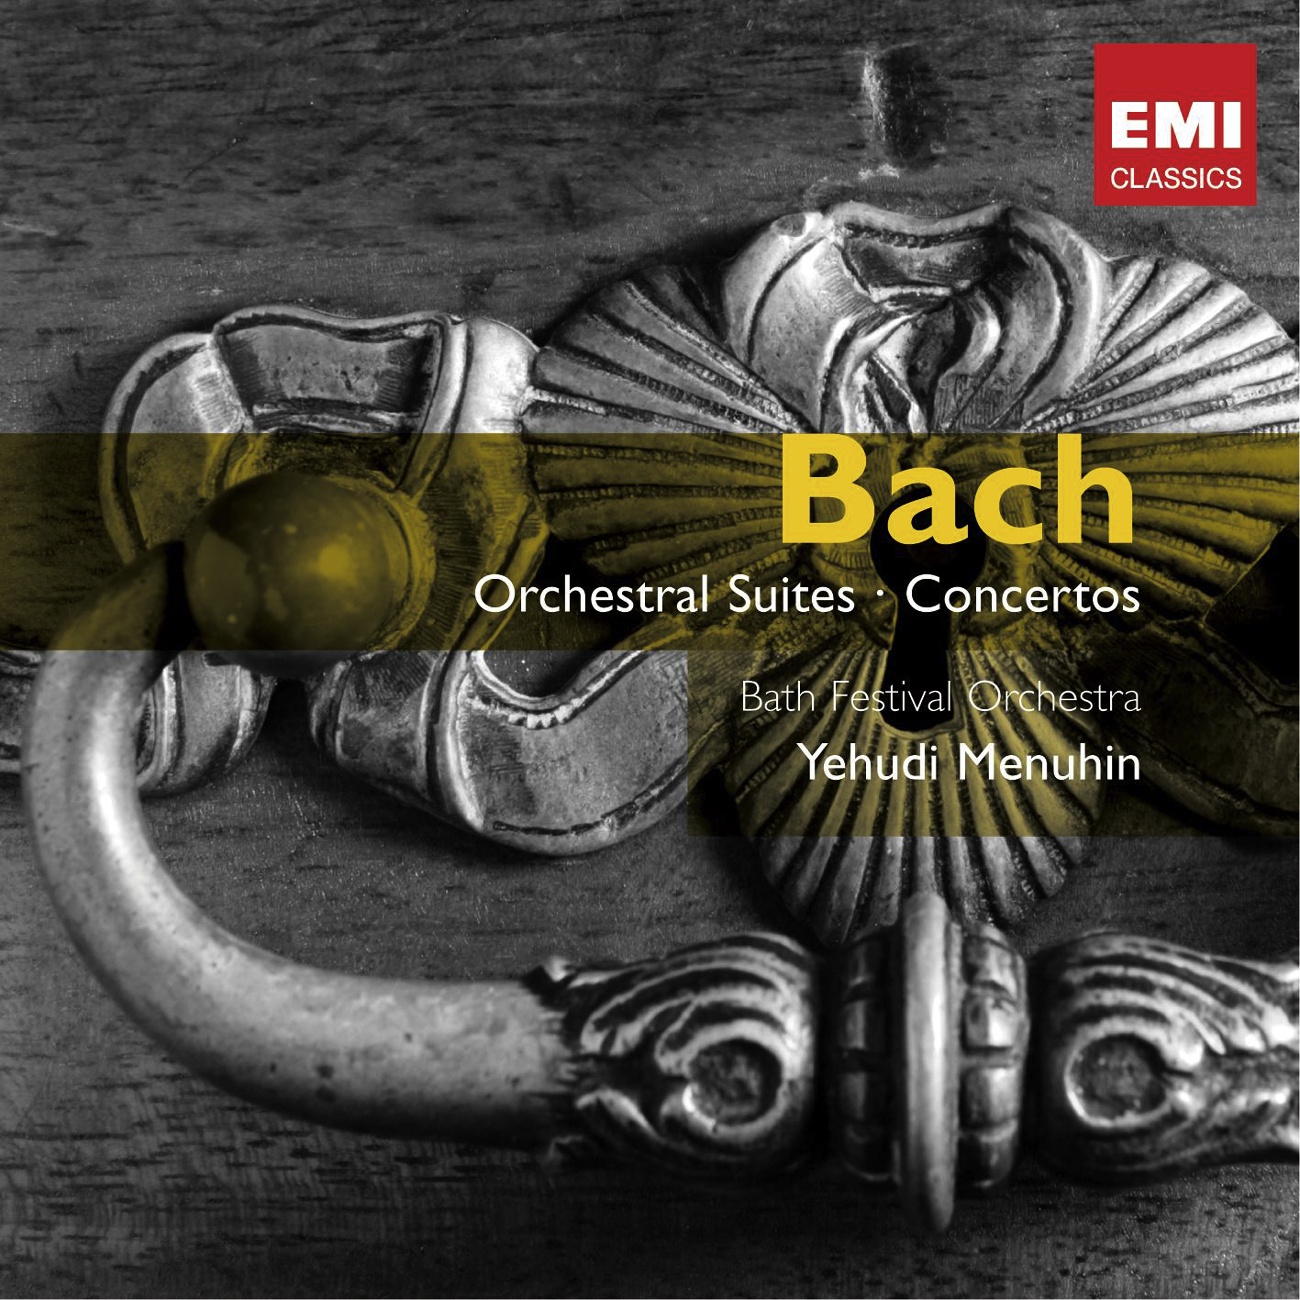 4 Orchestral Suites BWV1066-9 (1991 Digital Remaster), Suite No. 4 in D BWV1069: I.        Ouverture